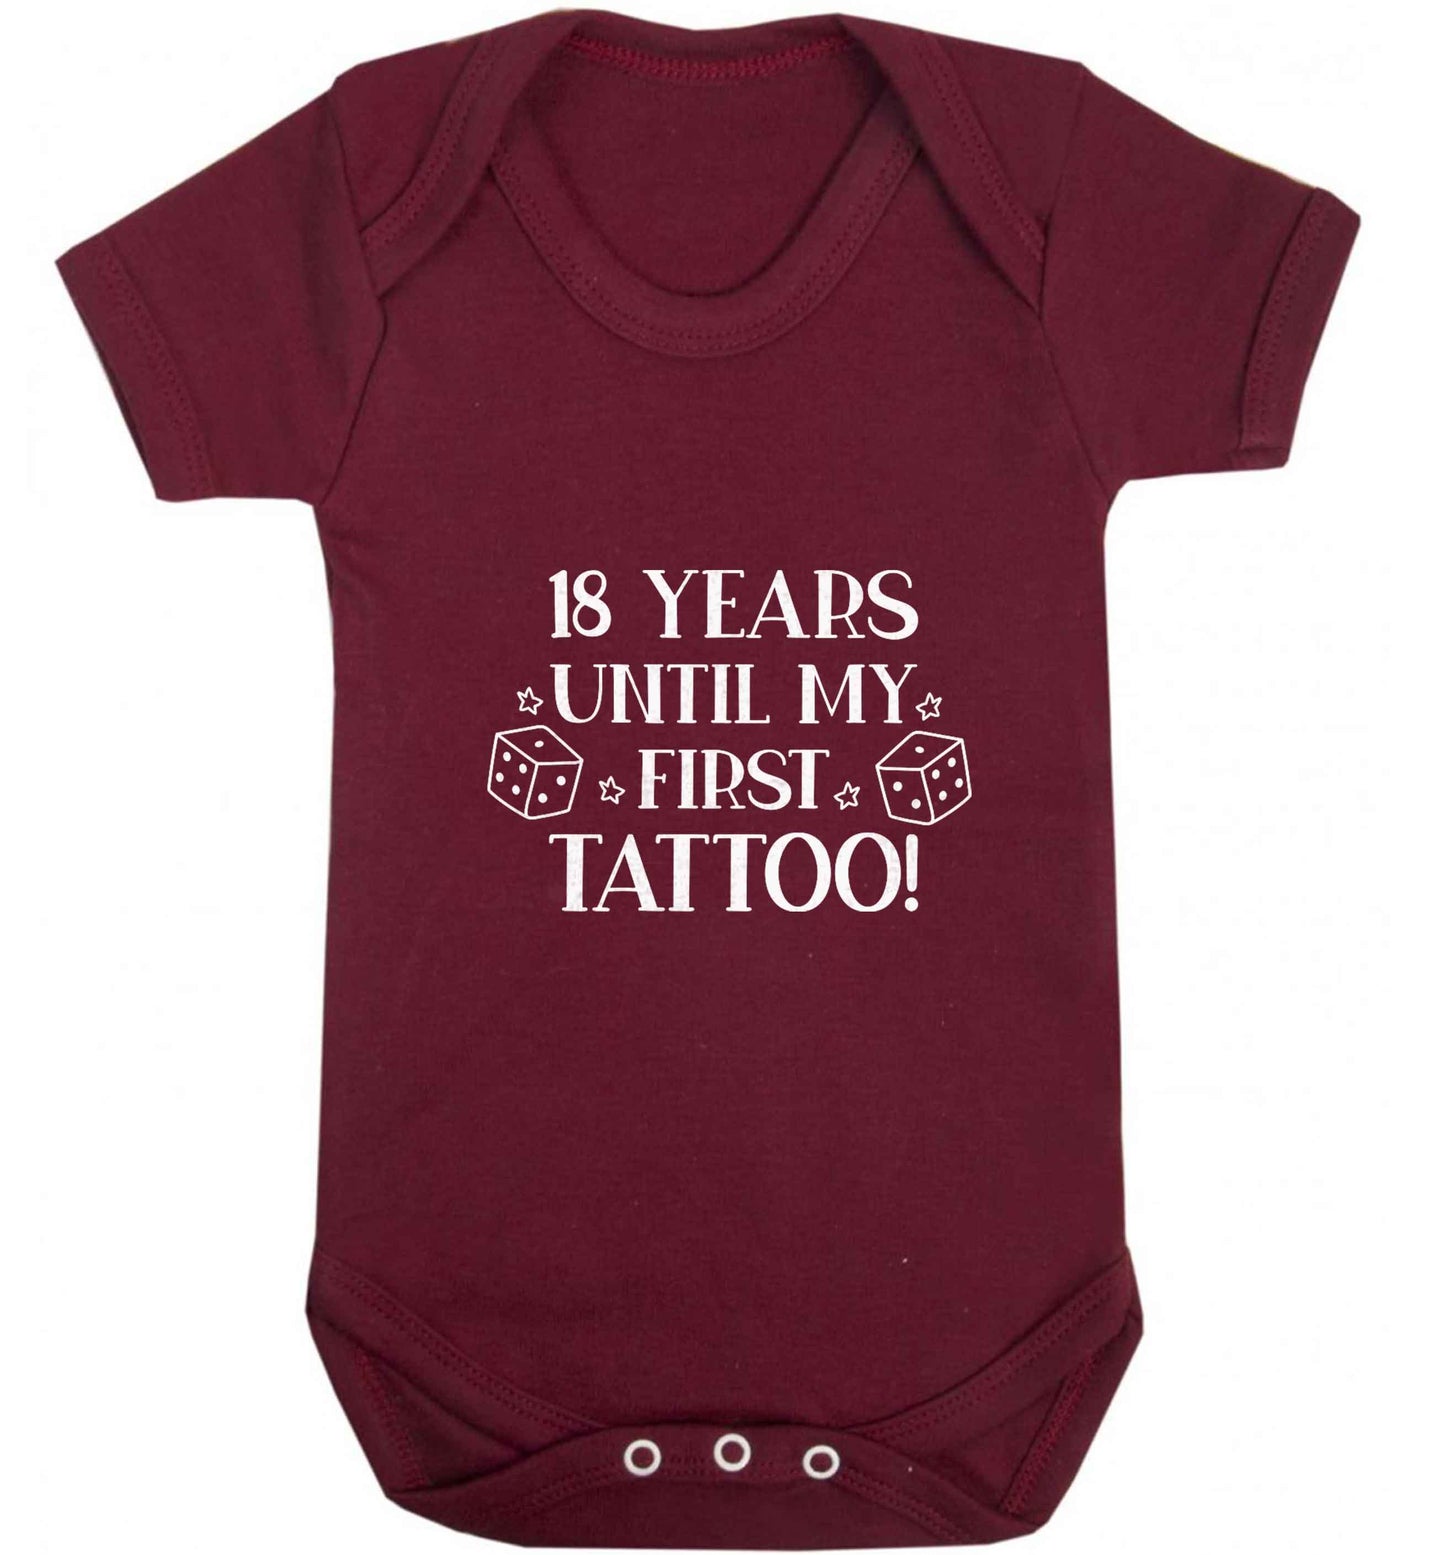 18 Years Until my First Tattoo baby vest maroon 18-24 months